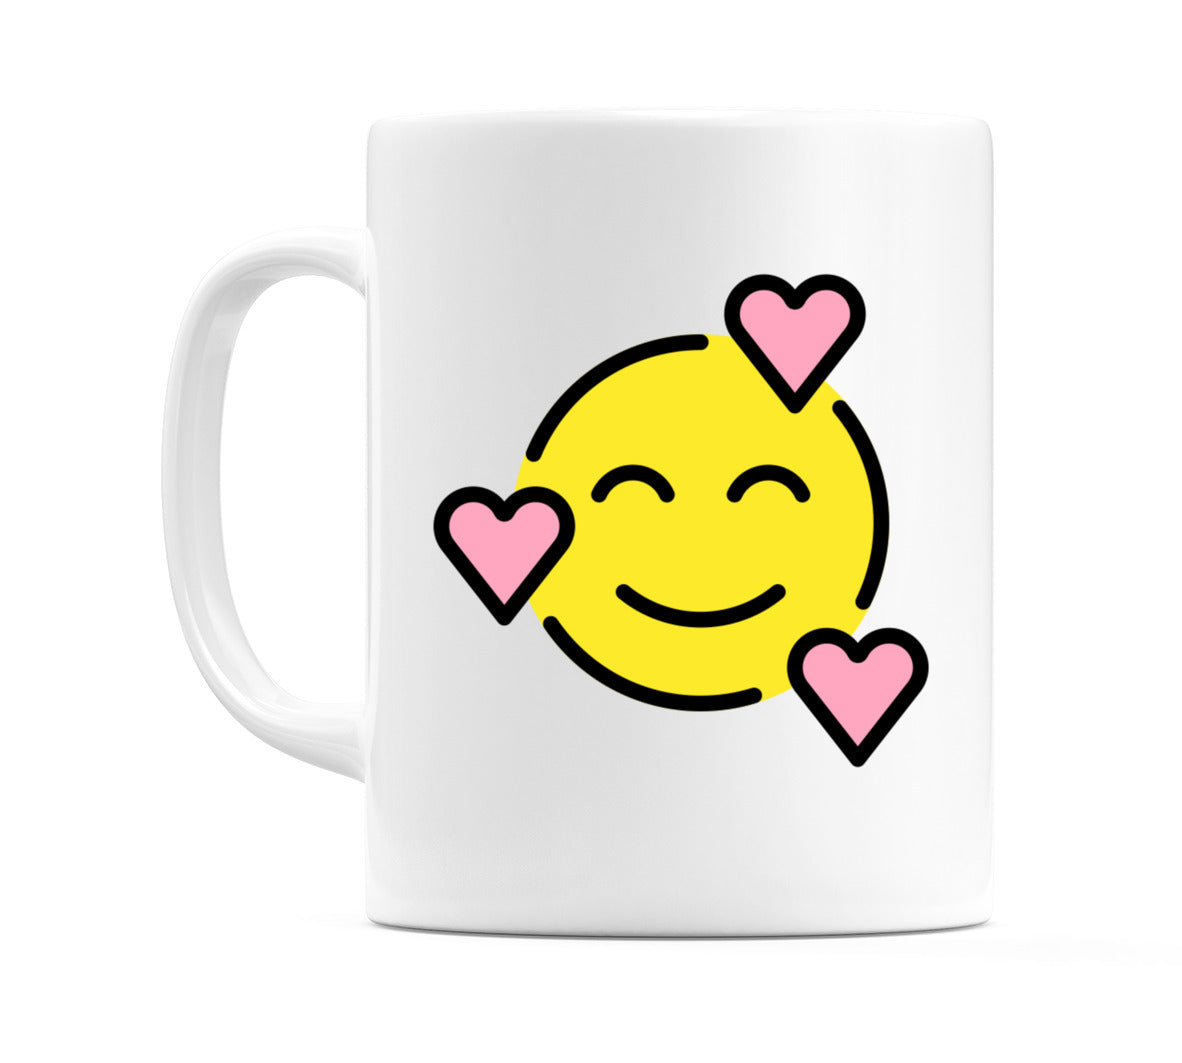 Smiling Face With Hearts Emoji Mug